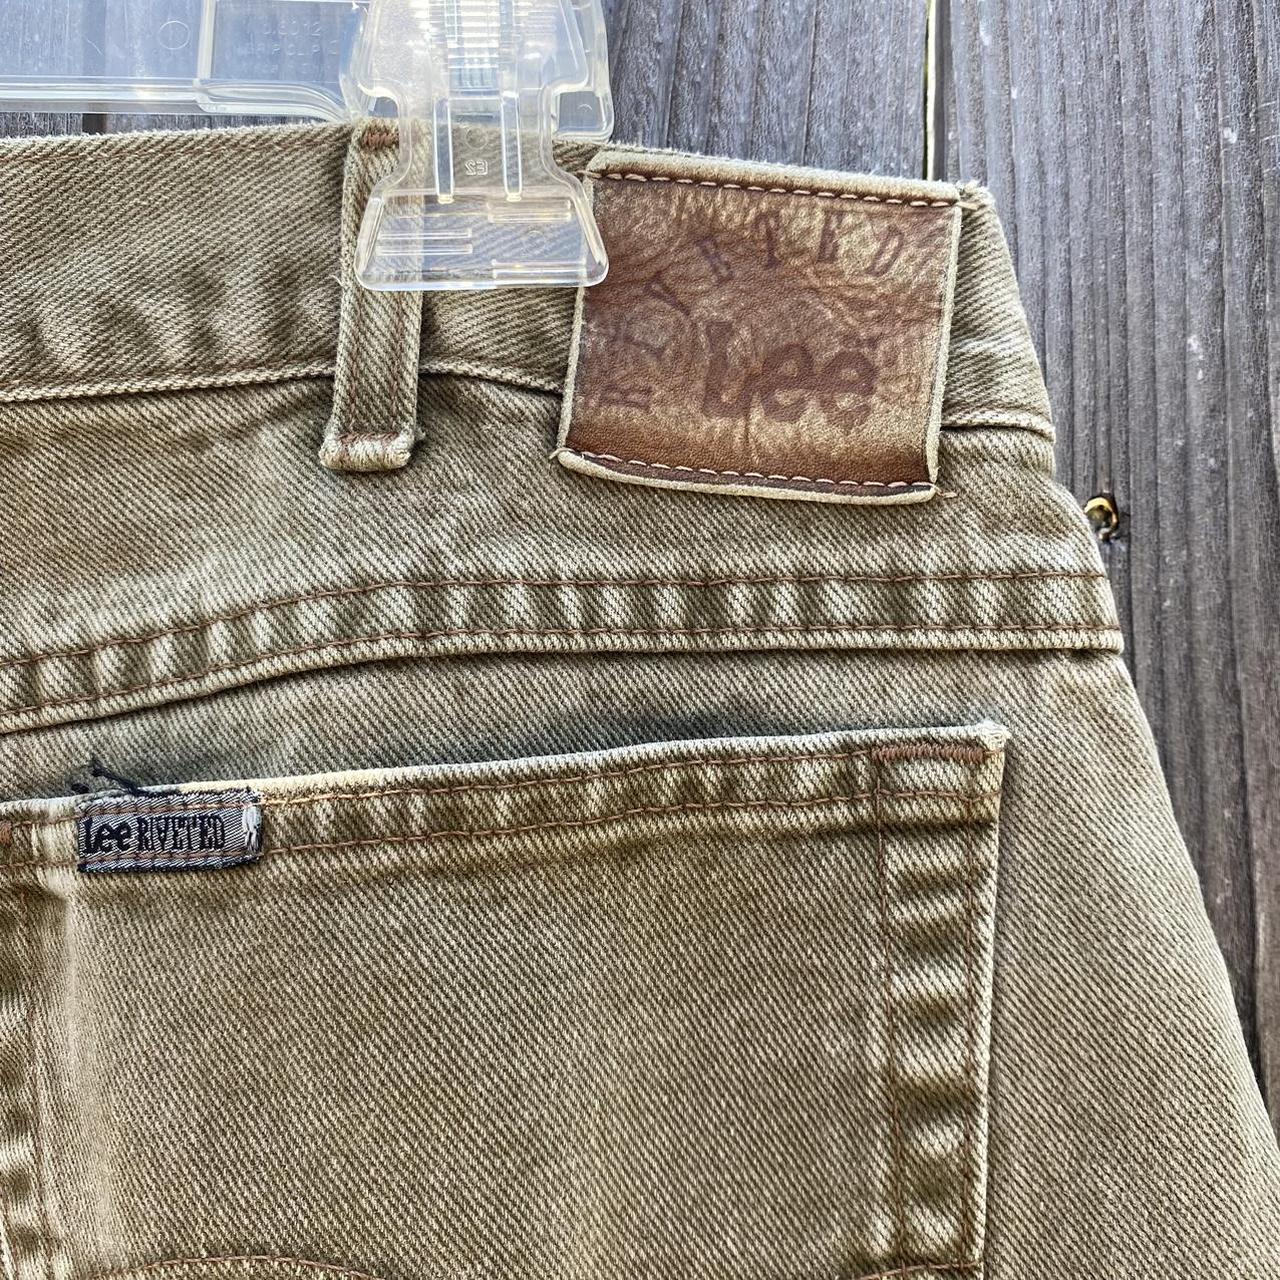 Lee Men's Khaki and Brown Jeans | Depop